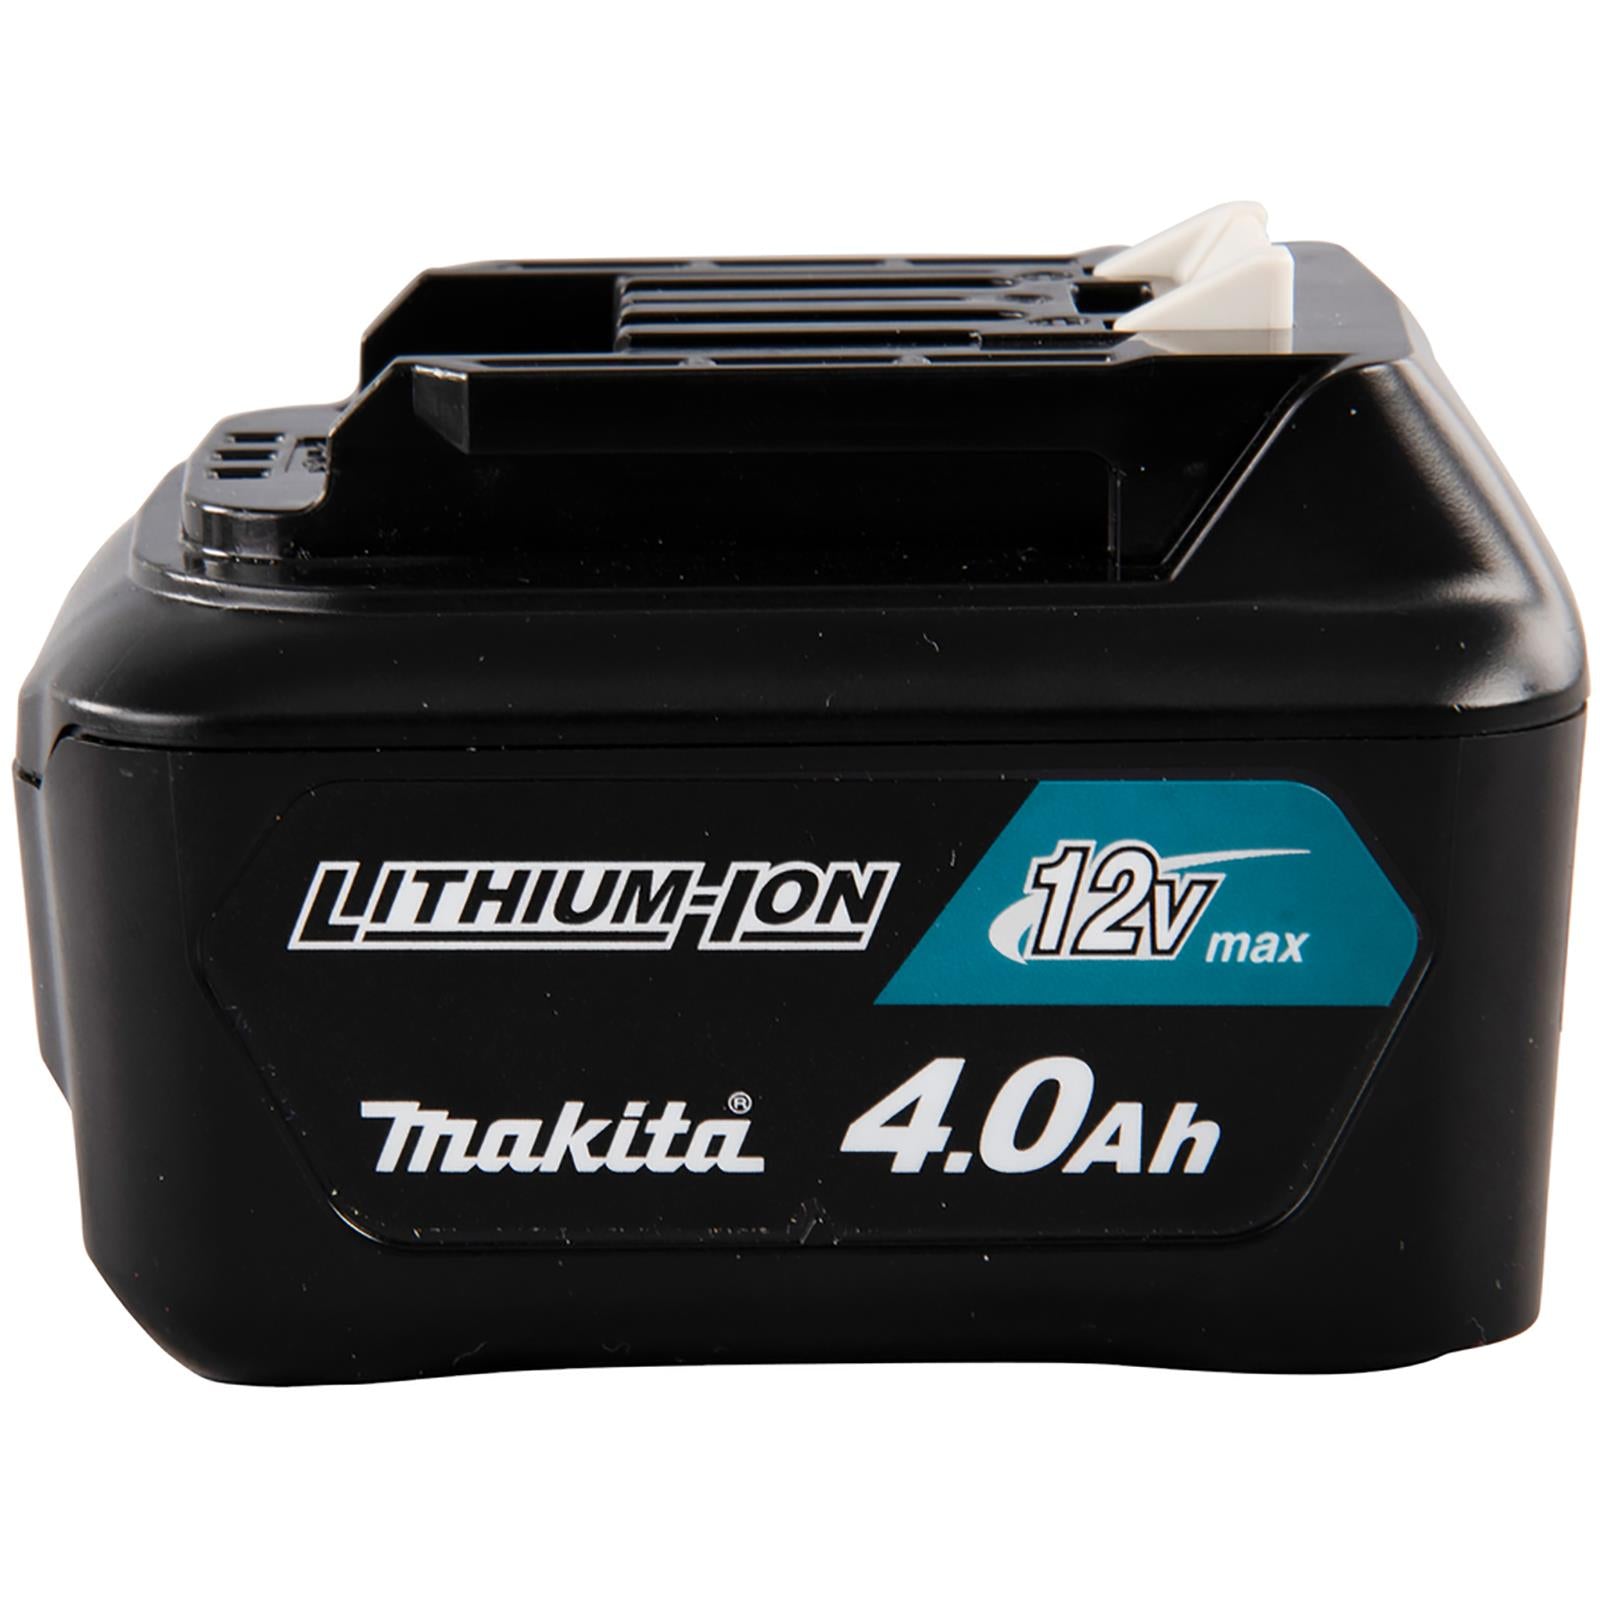 Makita CXT Battery 4.0Ah 12V Max Li-ion Light Compact Charge Level Indicator BL1041B